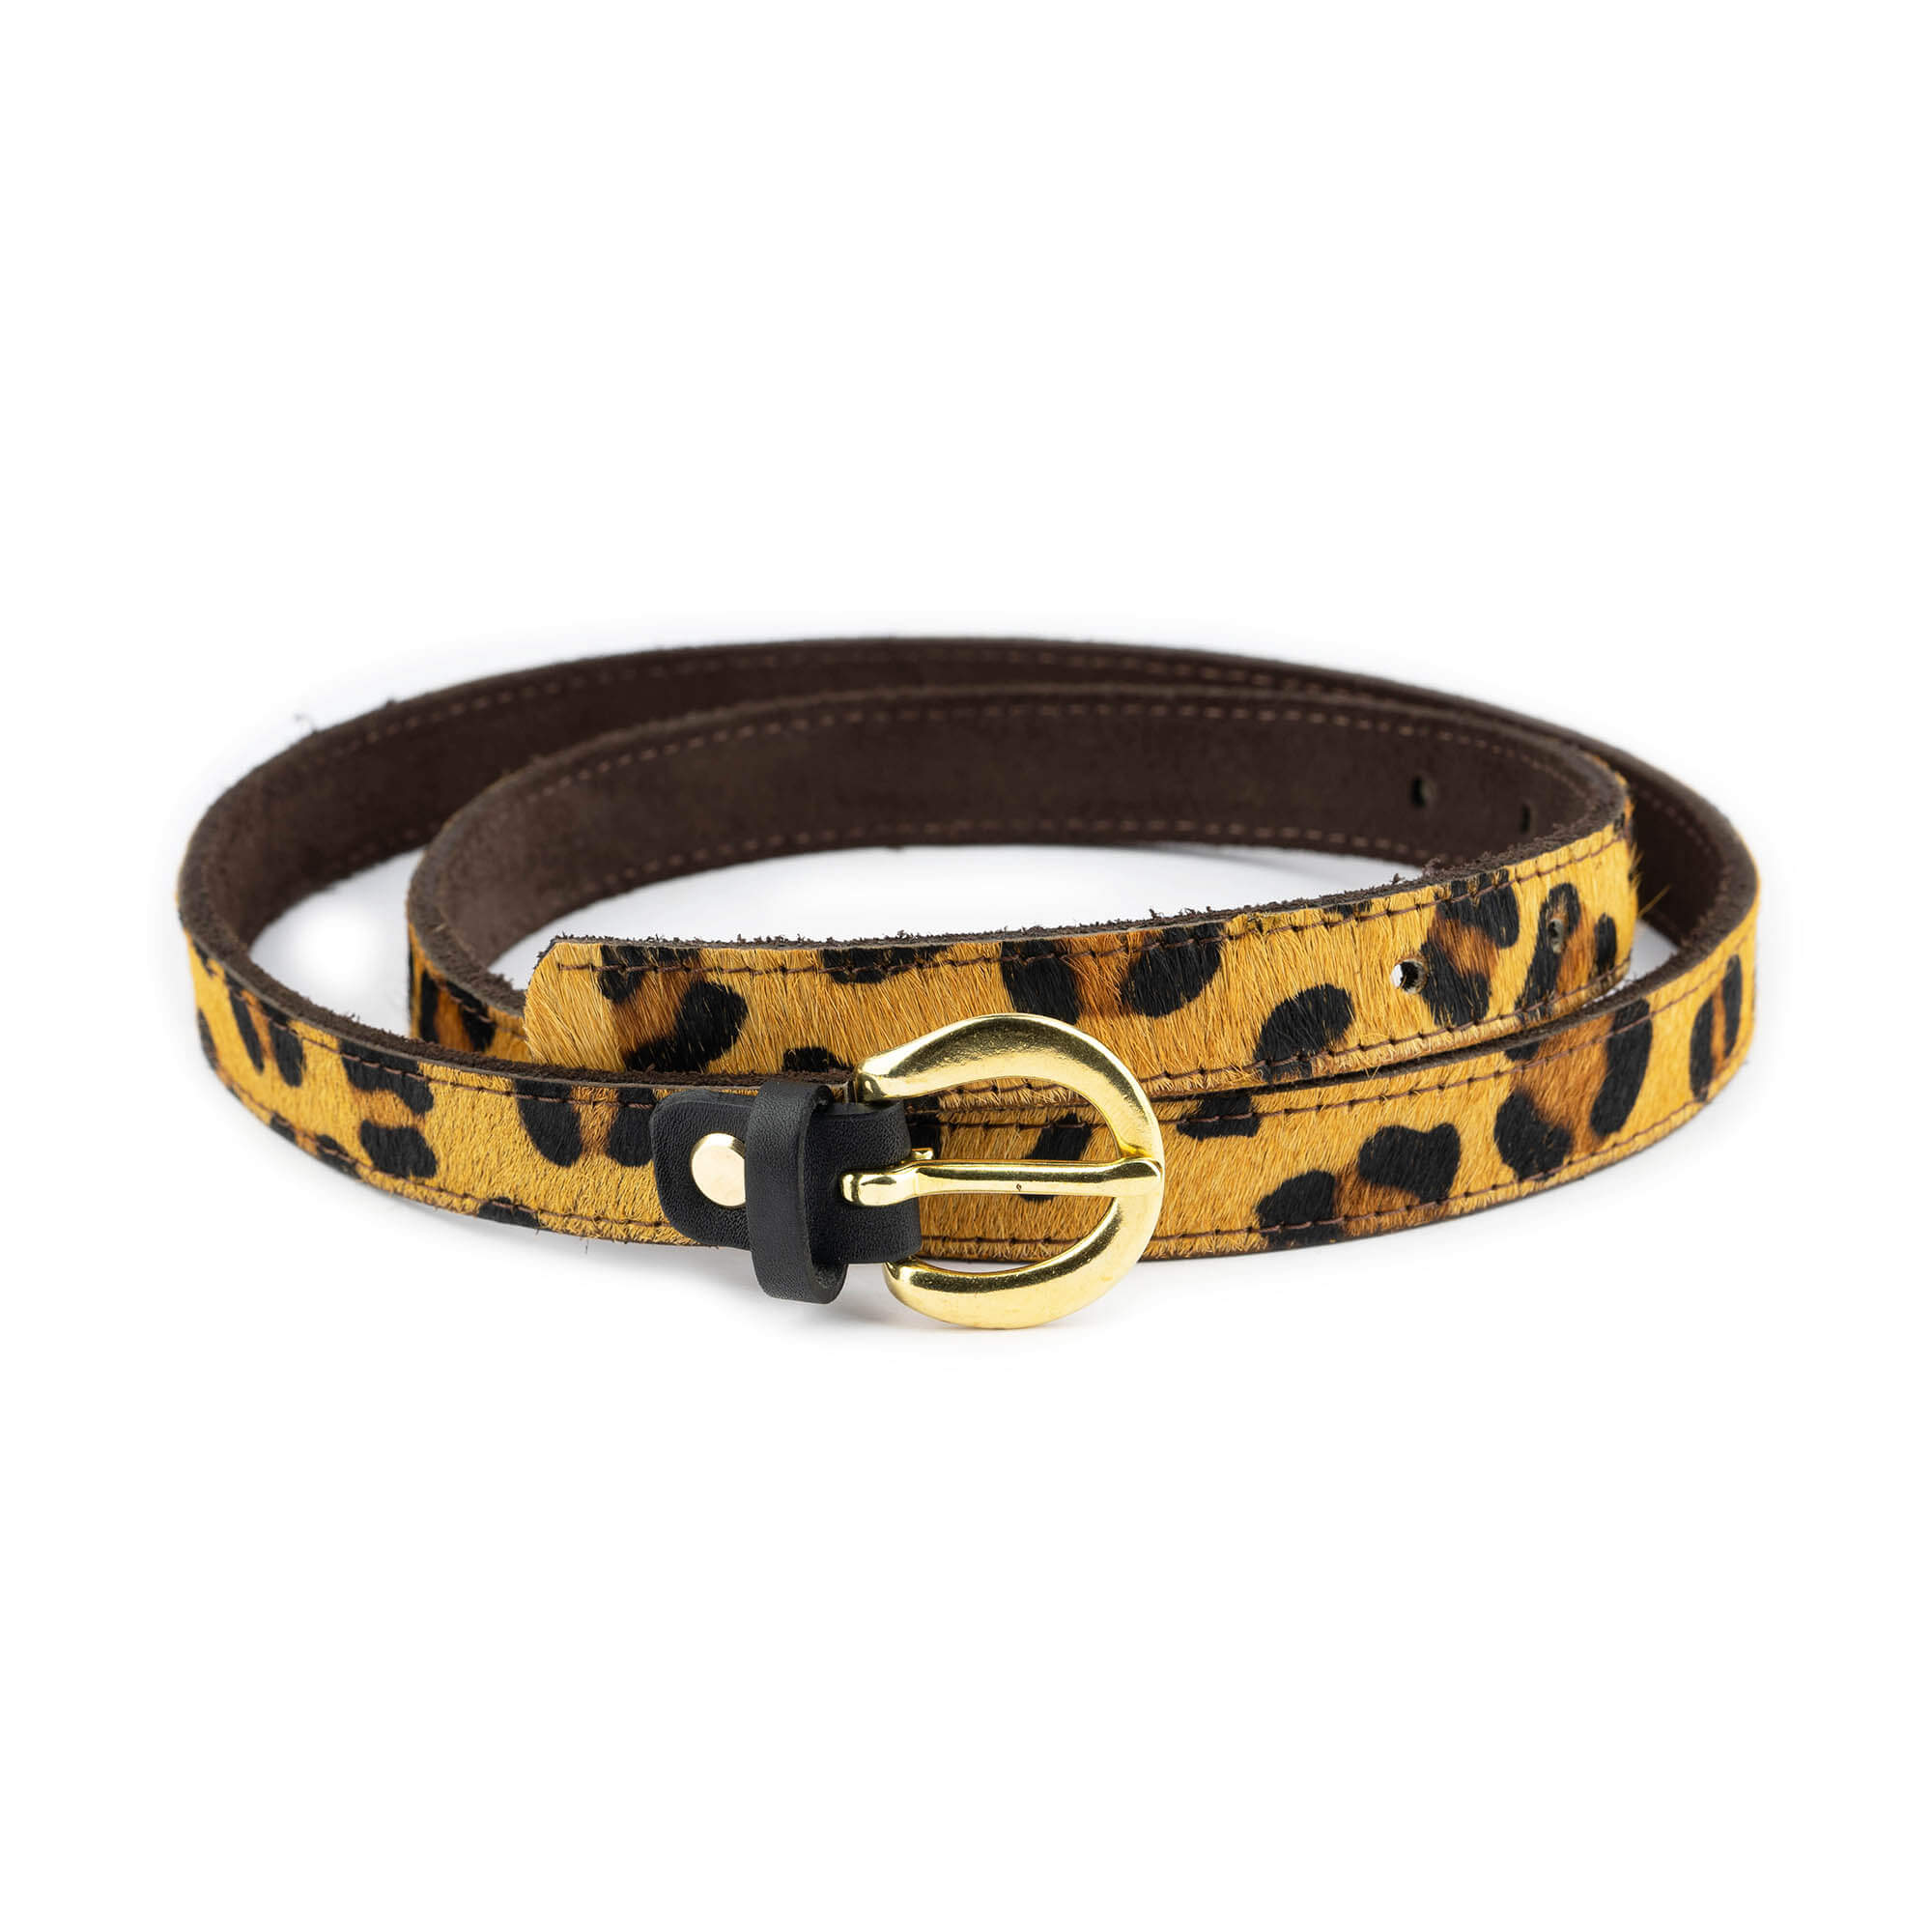 Buy Leopard Print Belt With Gold Buckle | LeatherBeltsOnline.com